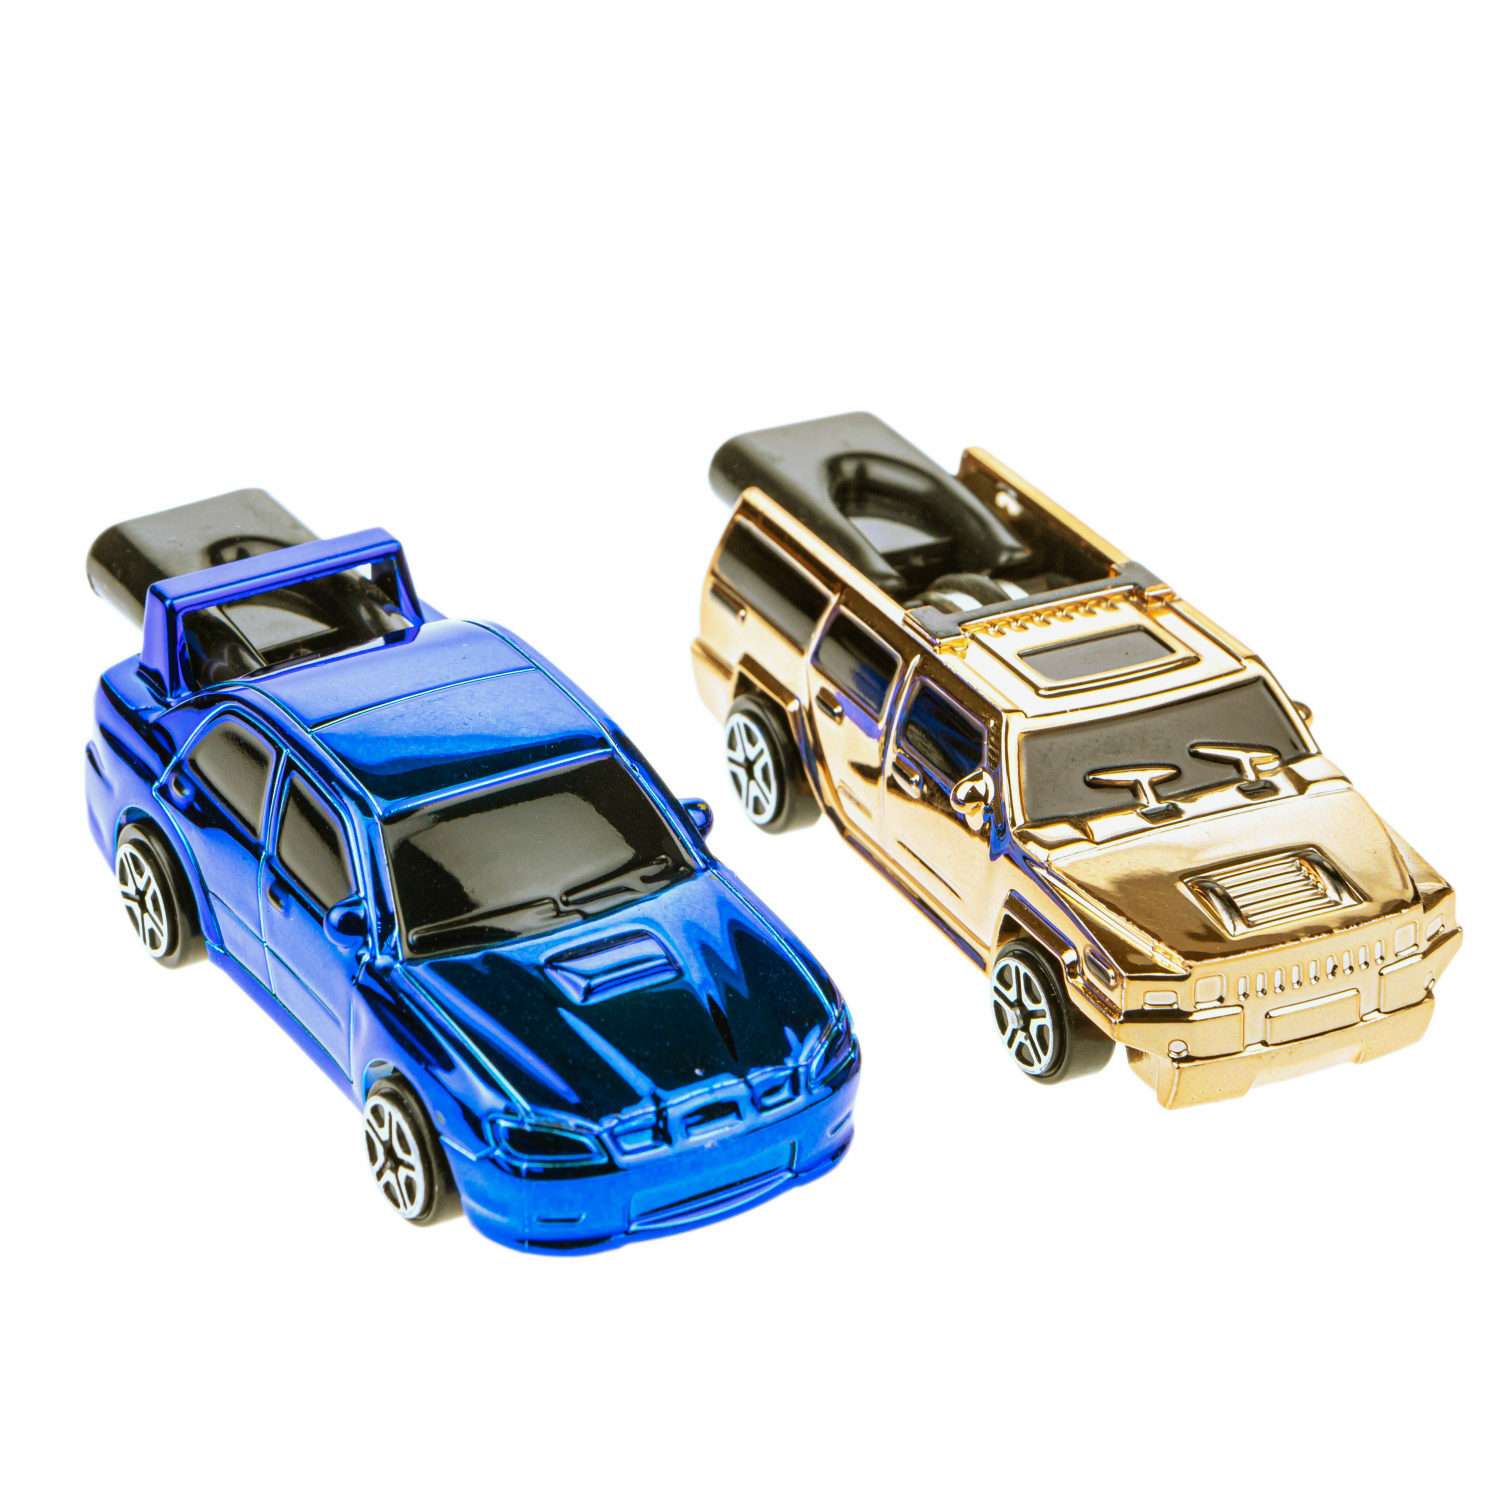 Набор машинок 1TOY Свист-авто синяя и горчичная Т20975-3 - фото 1